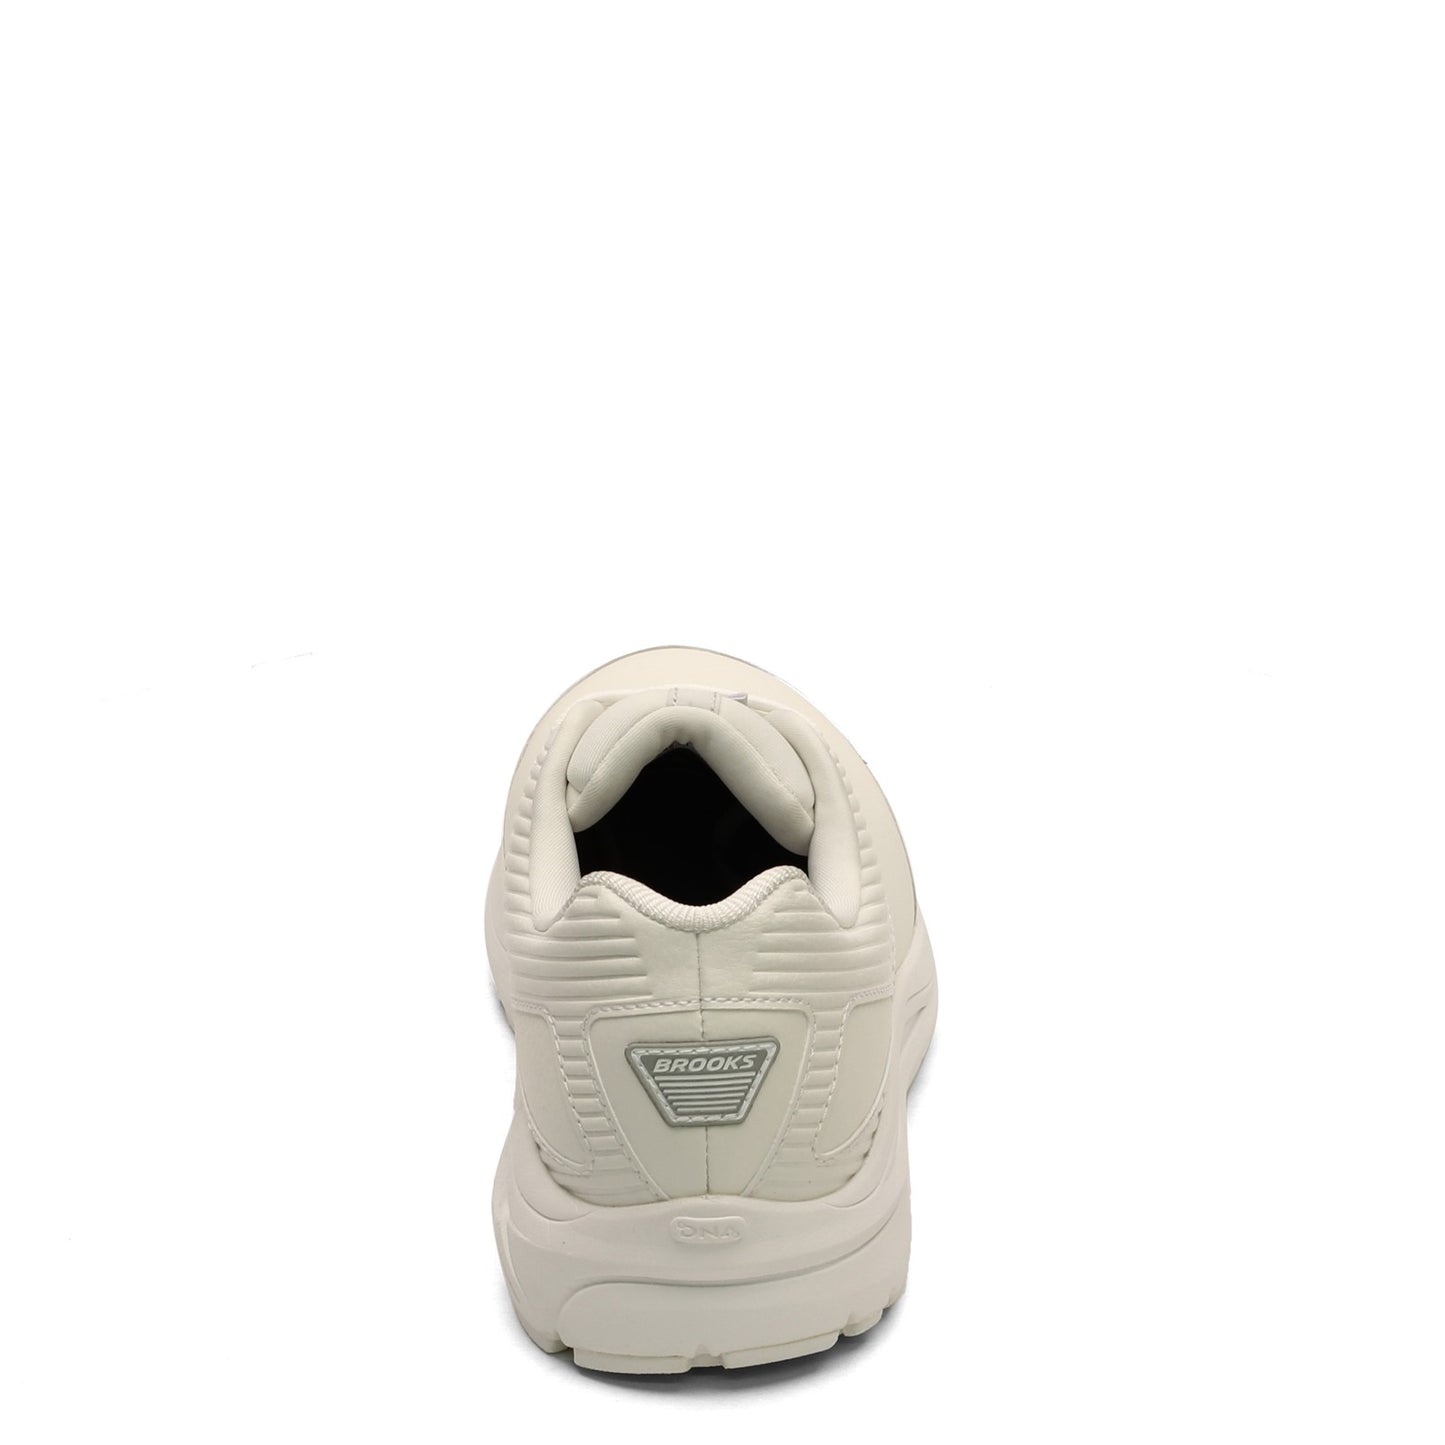 Peltz Shoes  Men's Brooks Addiction Walker 2 Walking Shoe - Extra Wide White/White 110318 4E 142